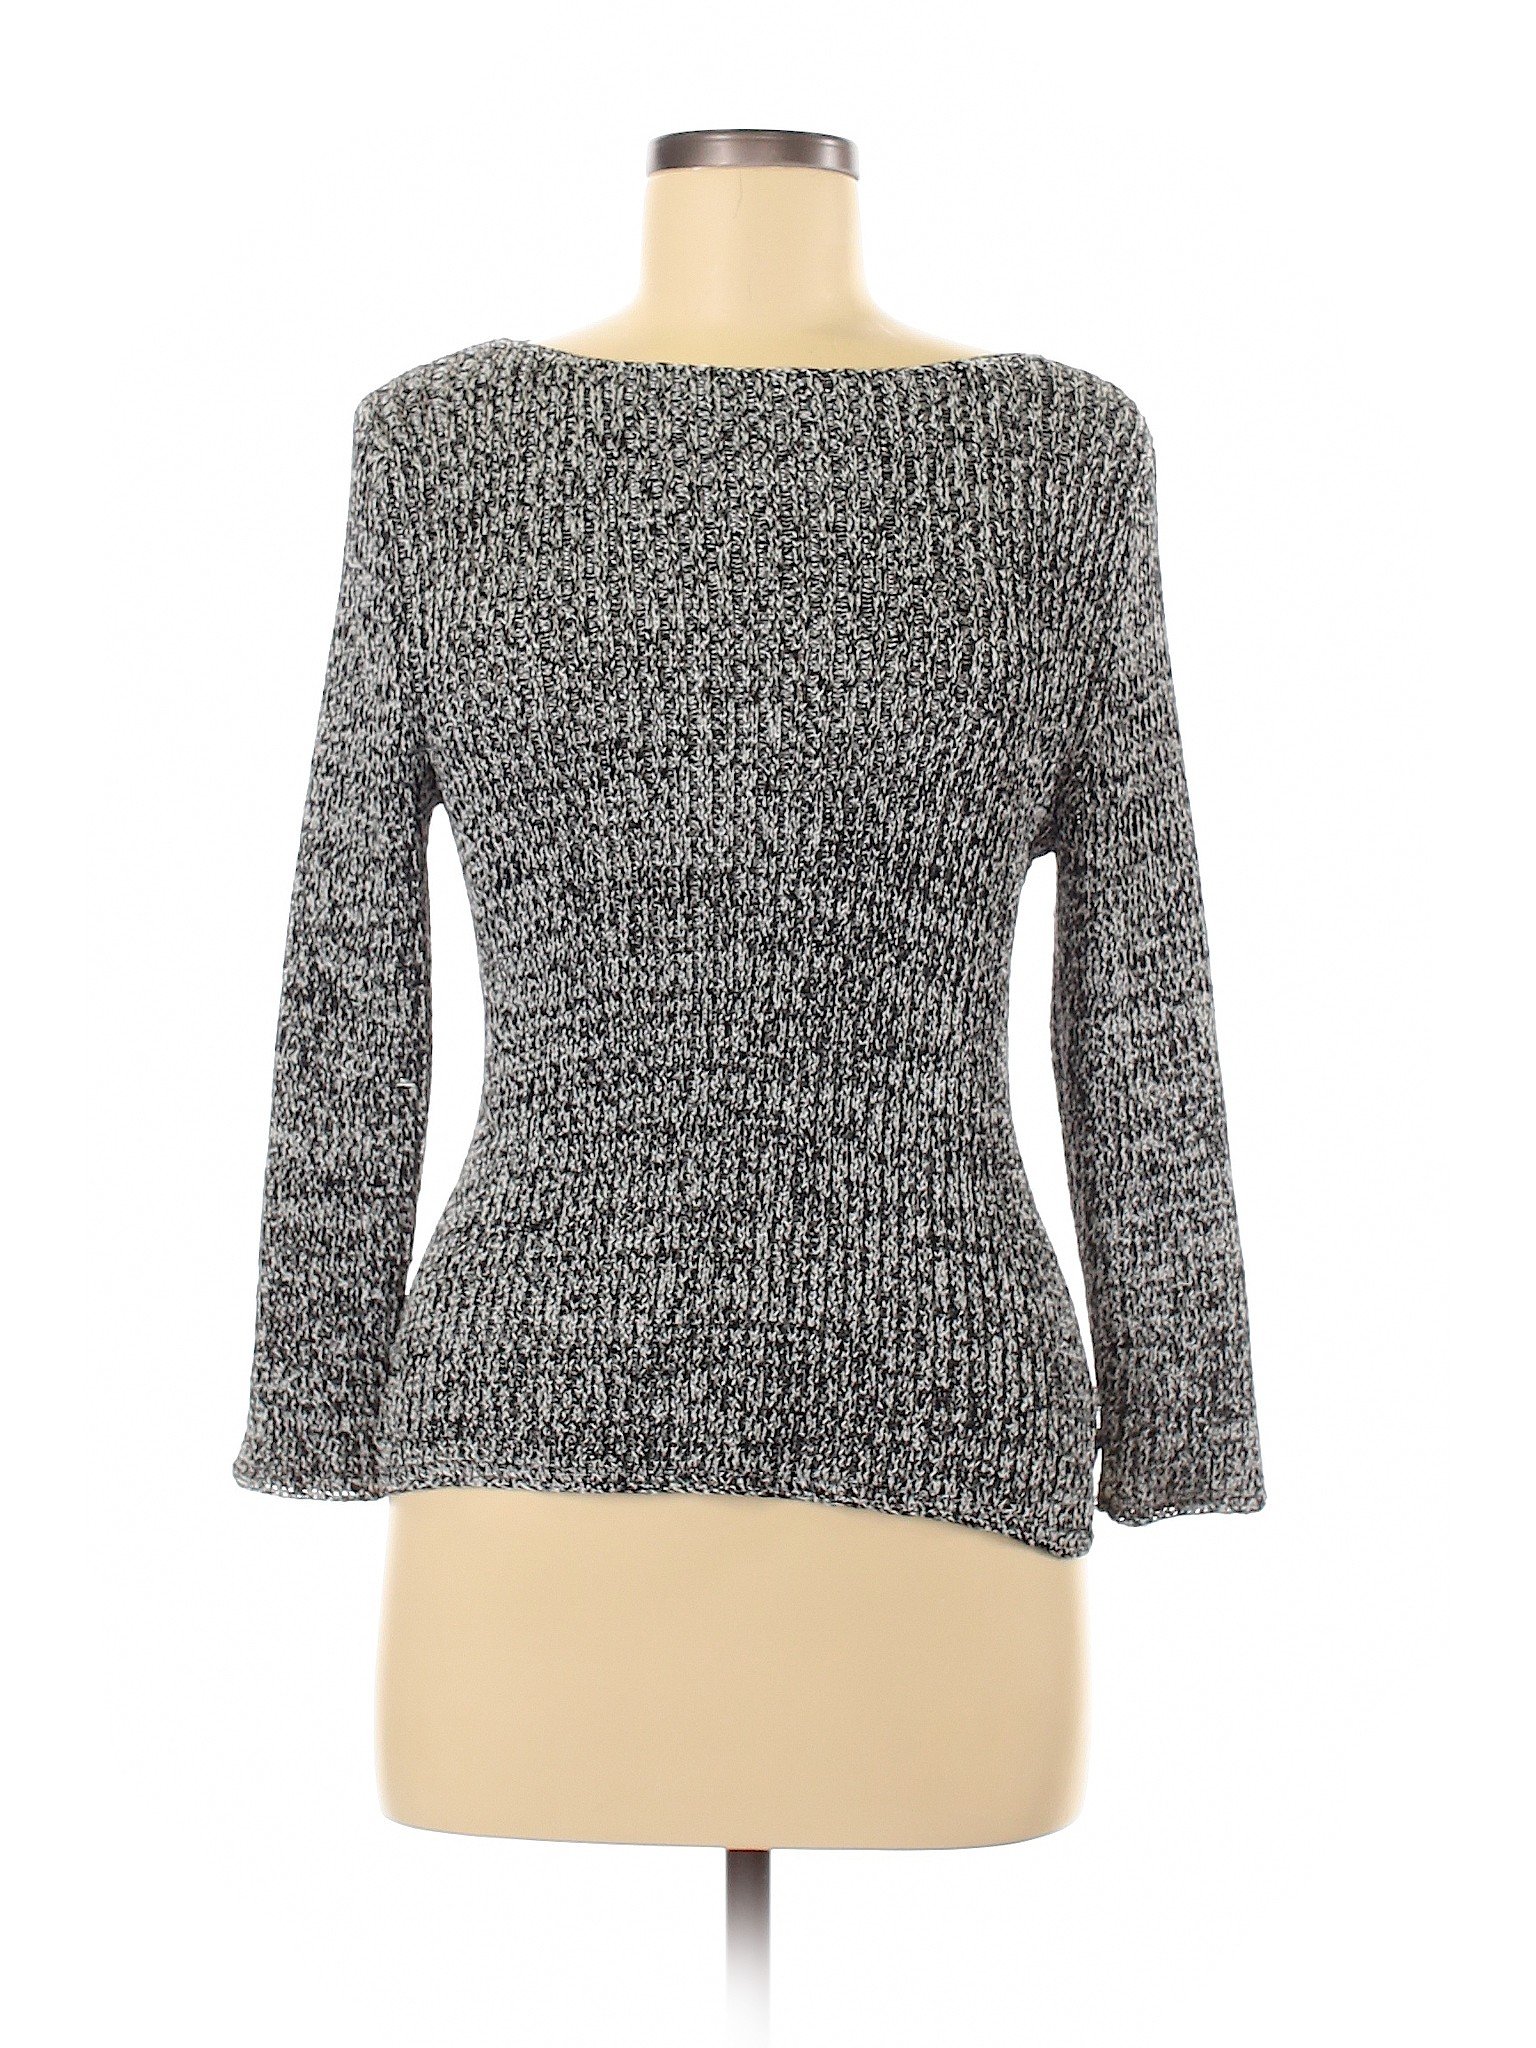 Uniform John Paul Richard Women Black Pullover Sweater M | eBay